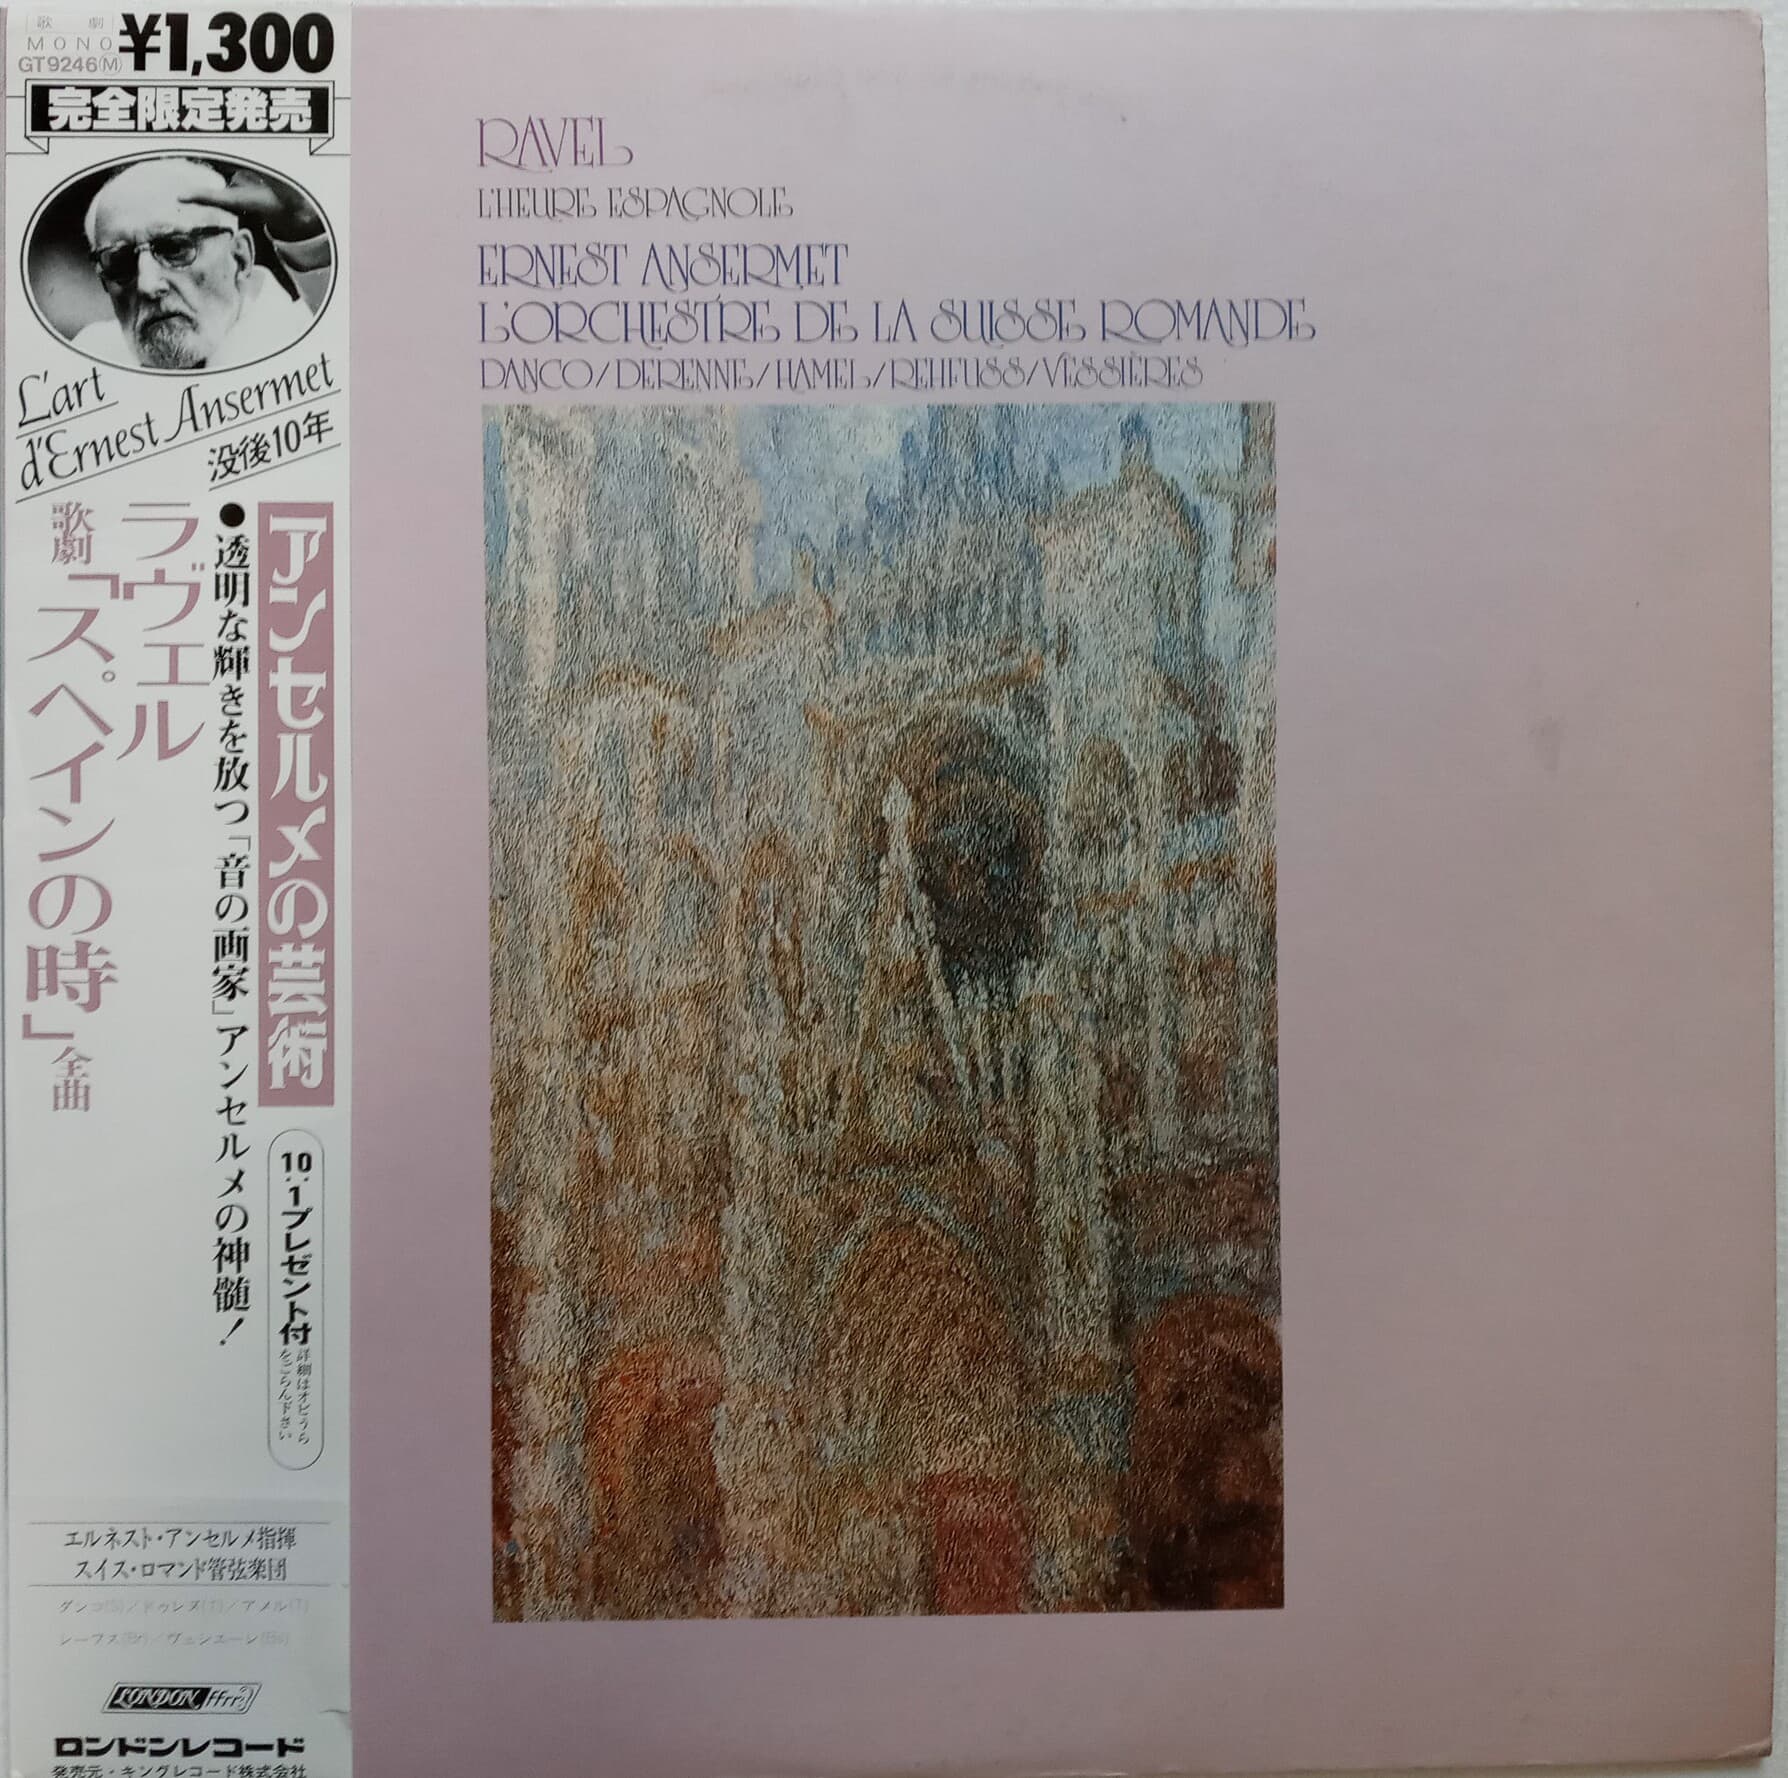 LP(수입) 라벨: 가극 스페인의 시간(전곡) - 앙세르메 / 스위스 로망드 관현악단